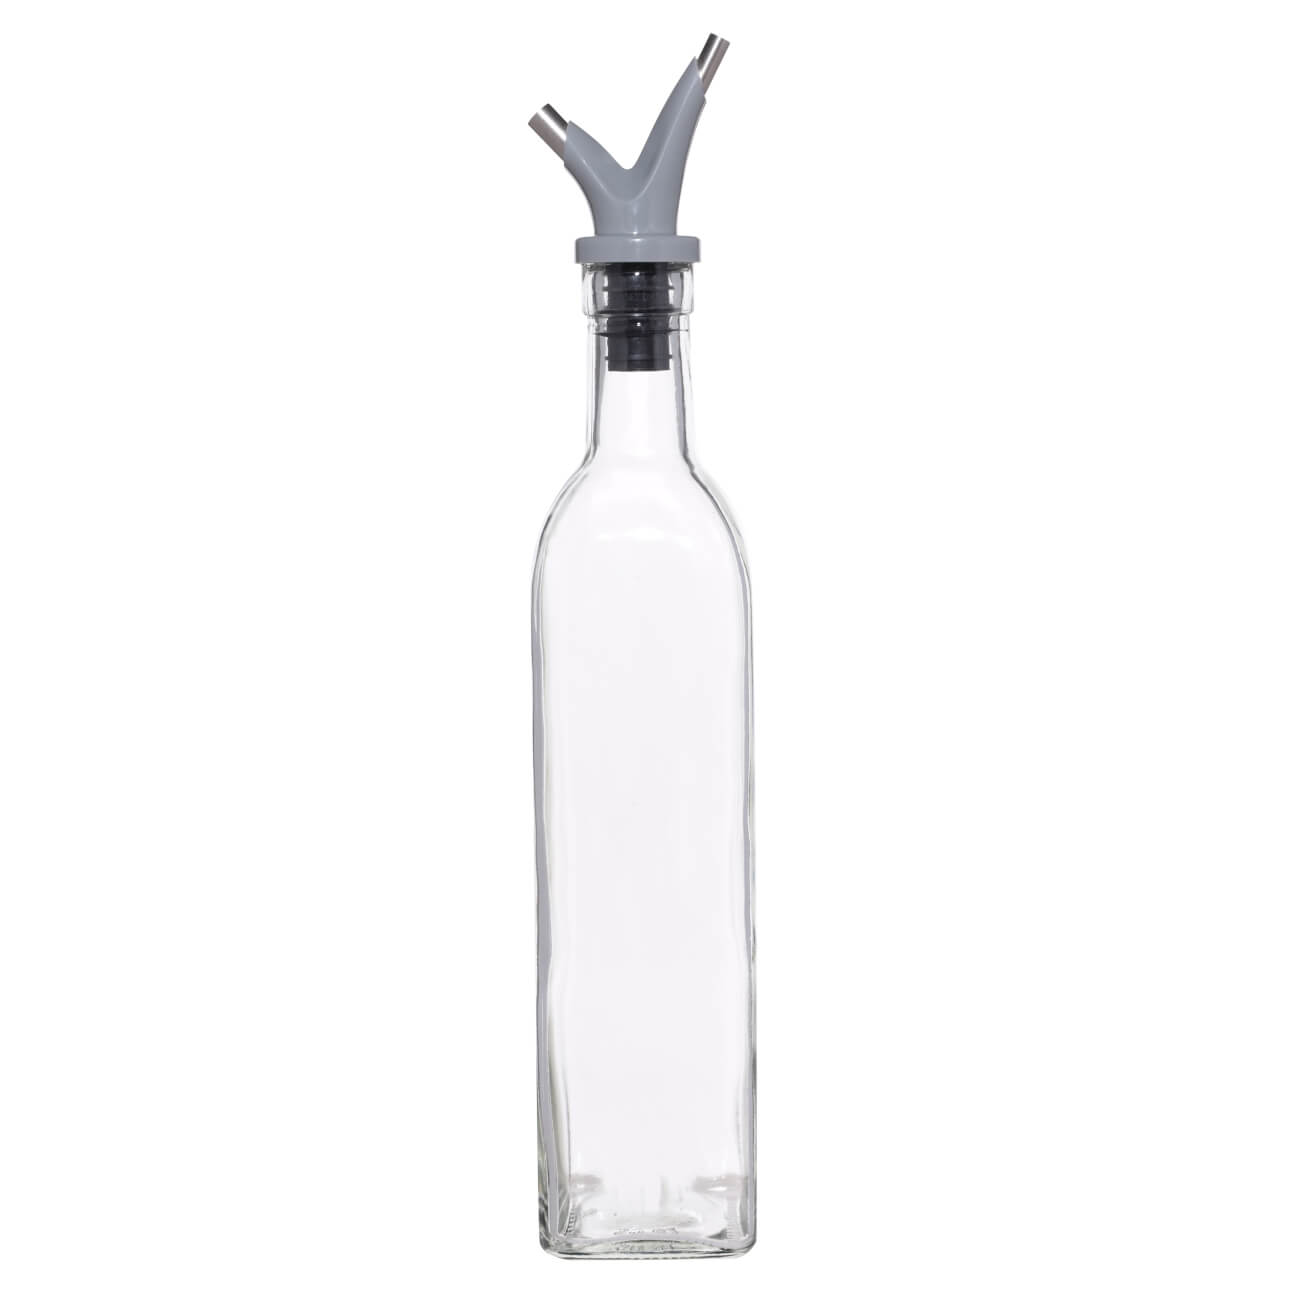 Oil or vinegar bottle, 500 ml, with double dispenser, Glass/plastic, Assist изображение № 1